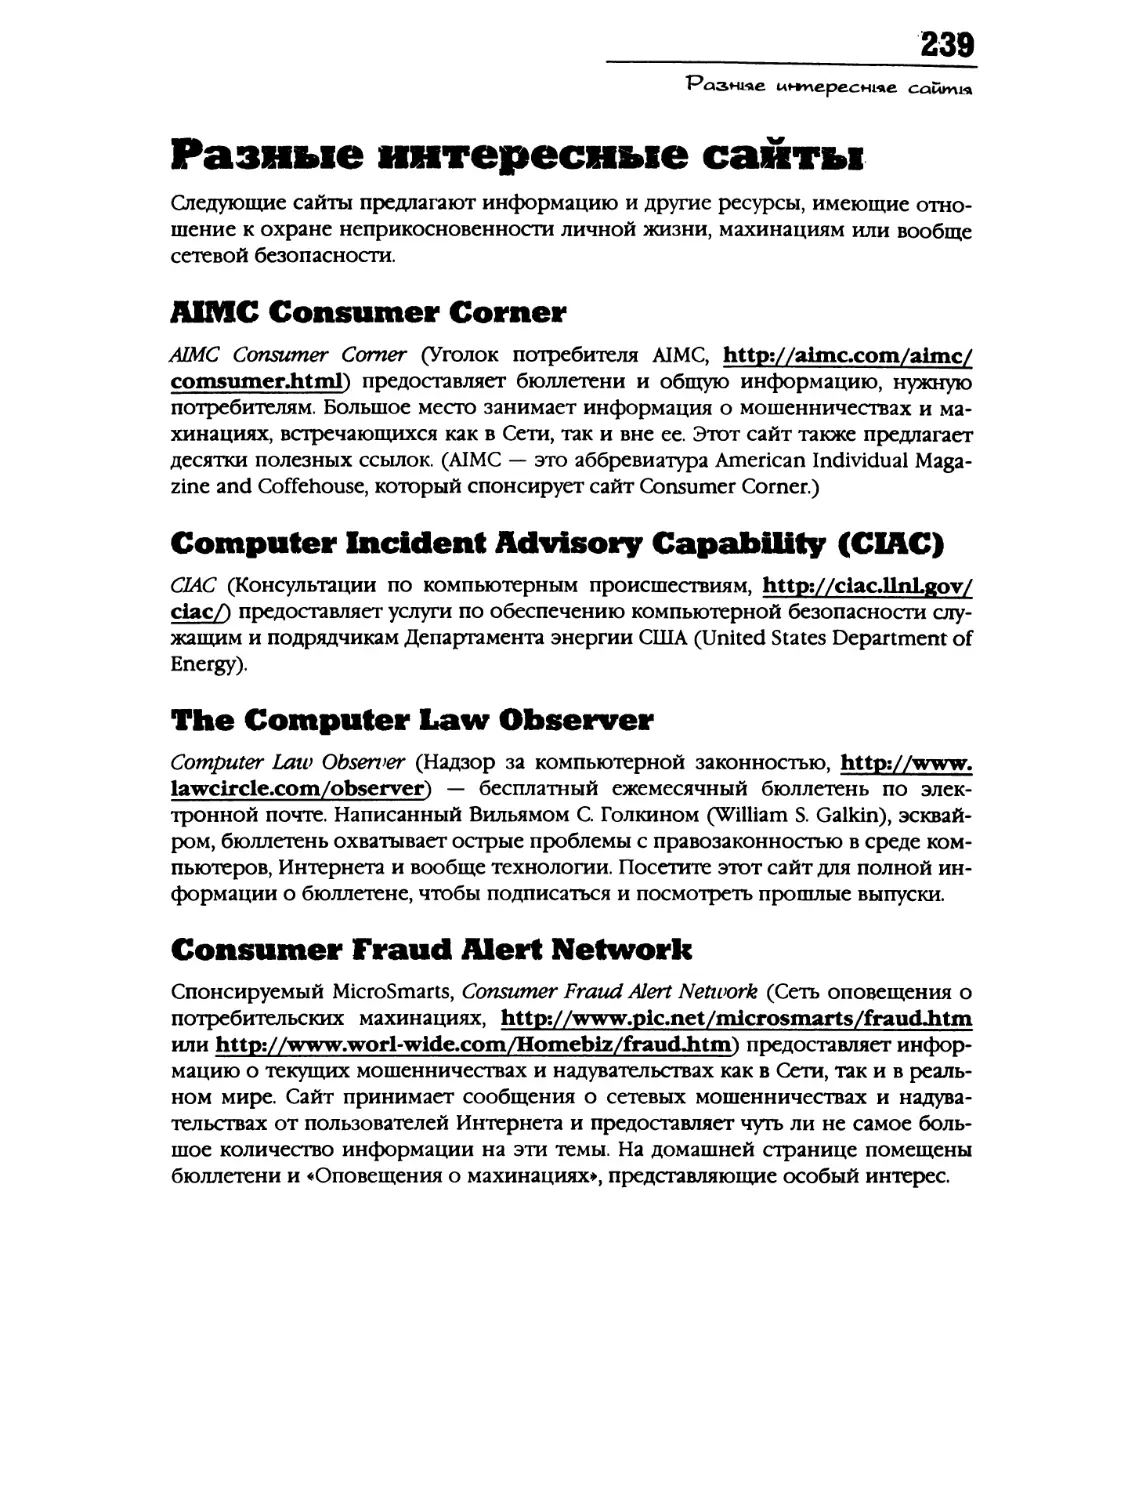 Разные интересные сайты
The Computer Law Observer
Consumer Fraud Alert Network